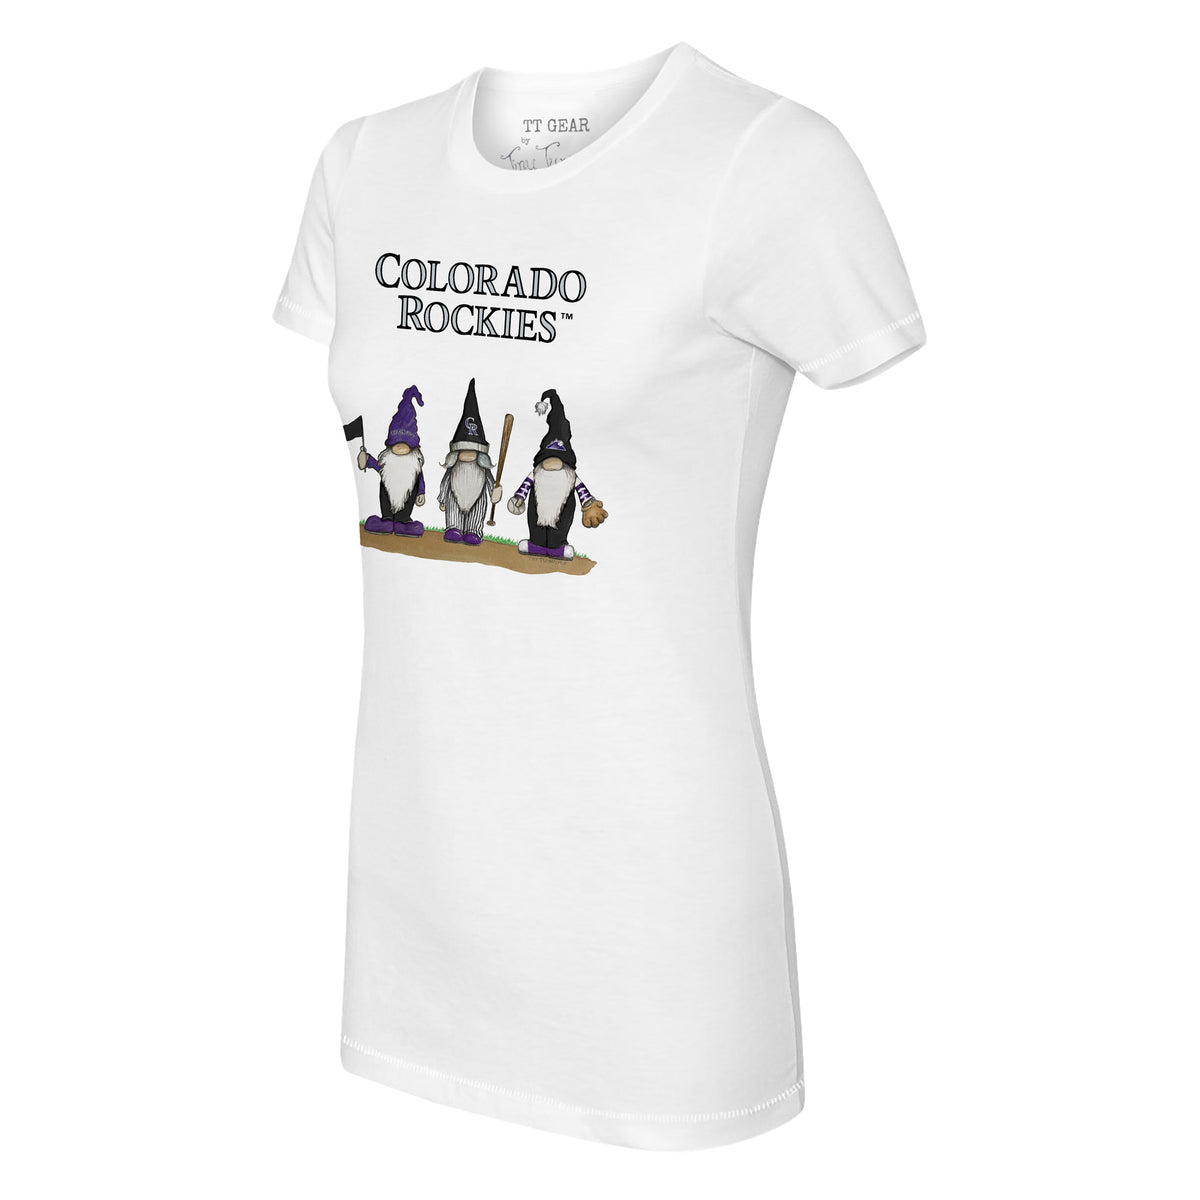 Colorado Rockies Gnomes Tee Shirt